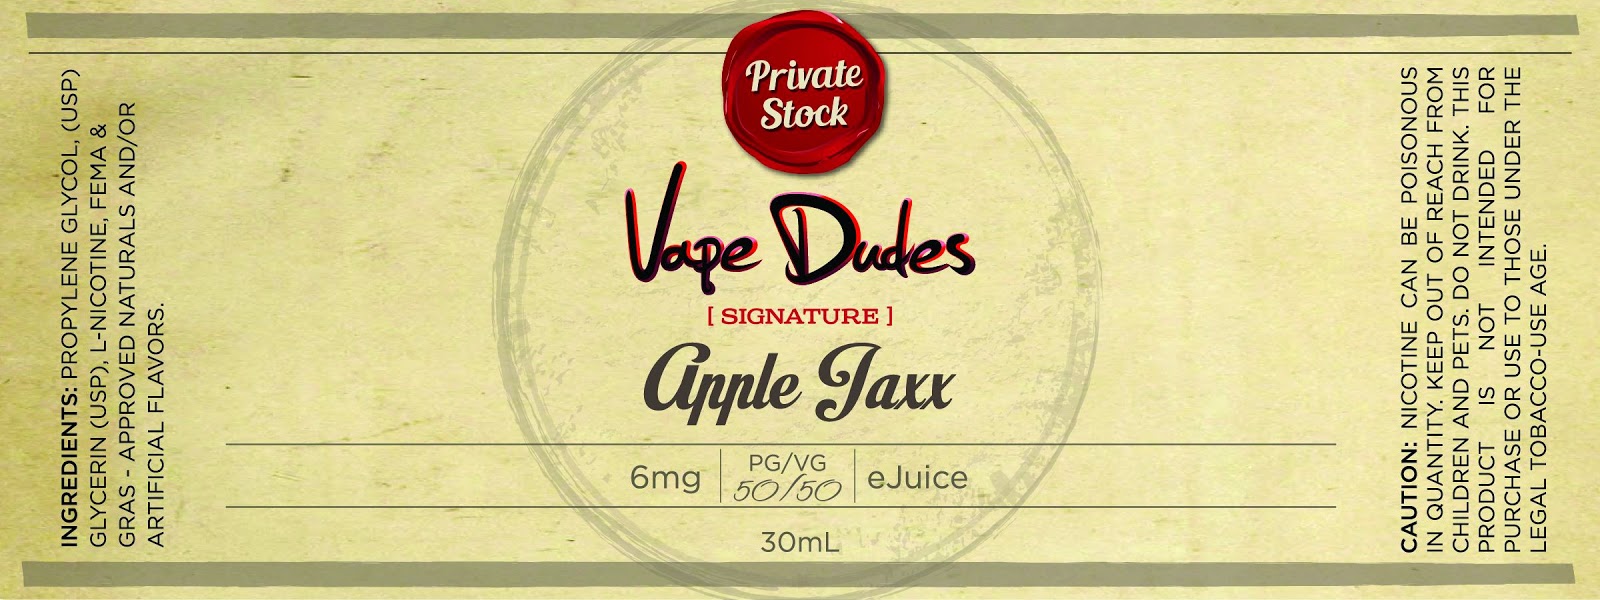 e juice label template download